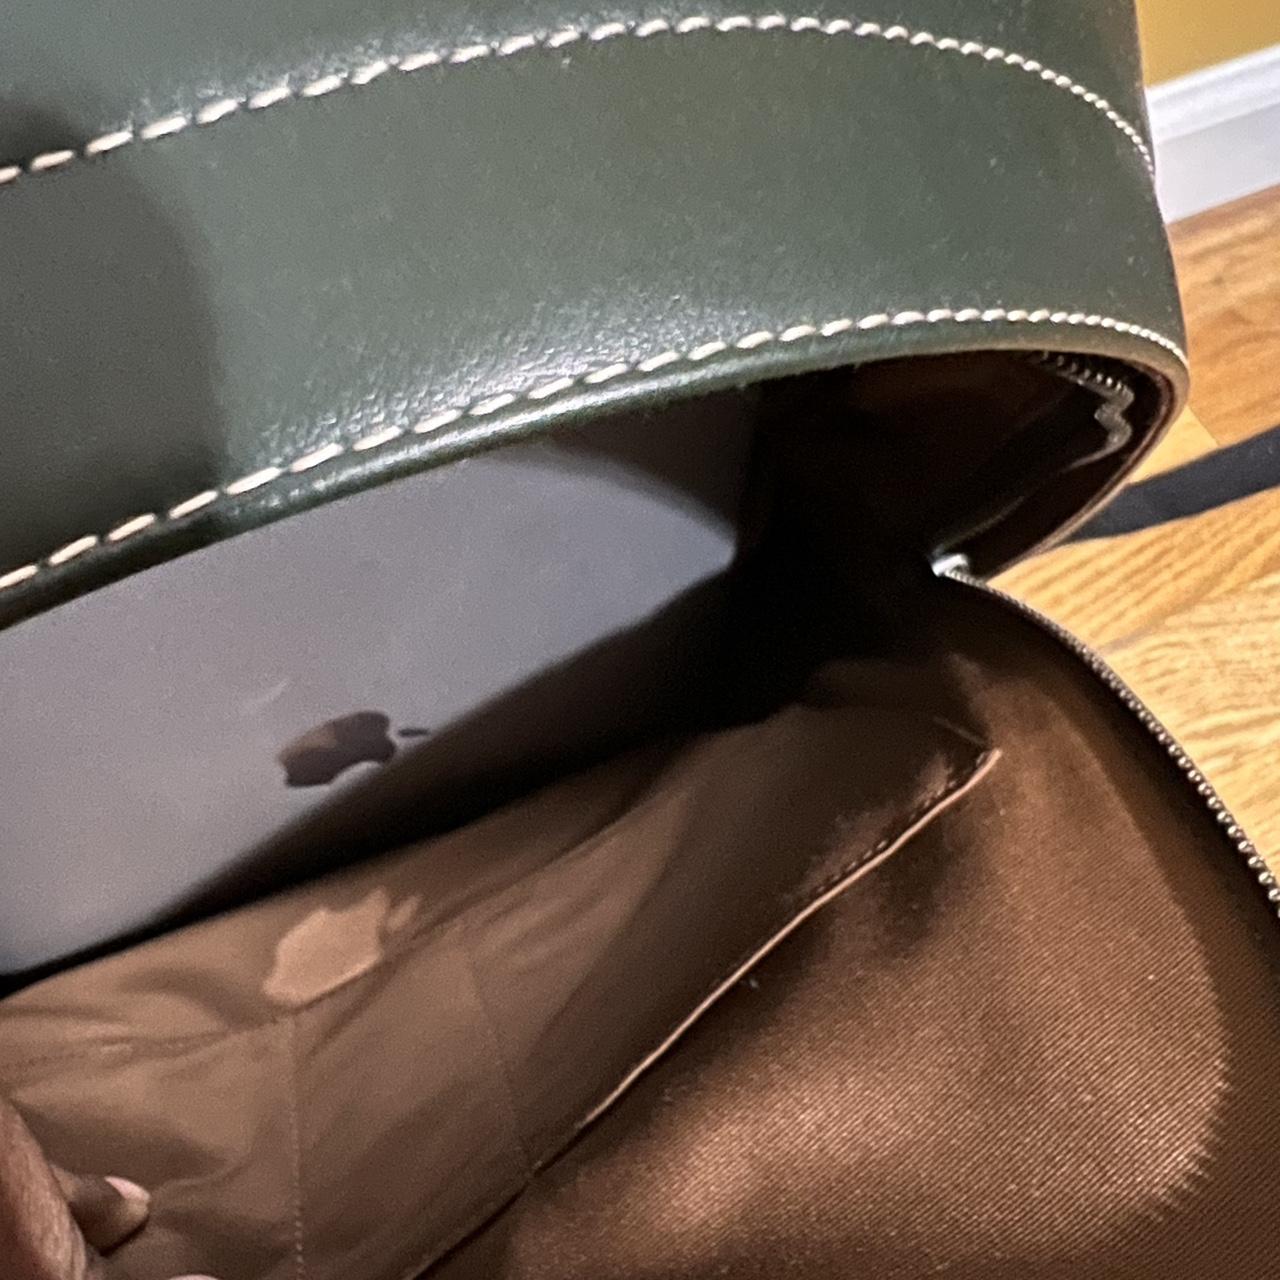 NWT Coah Leather Pennie backpack 22 Details taken - Depop